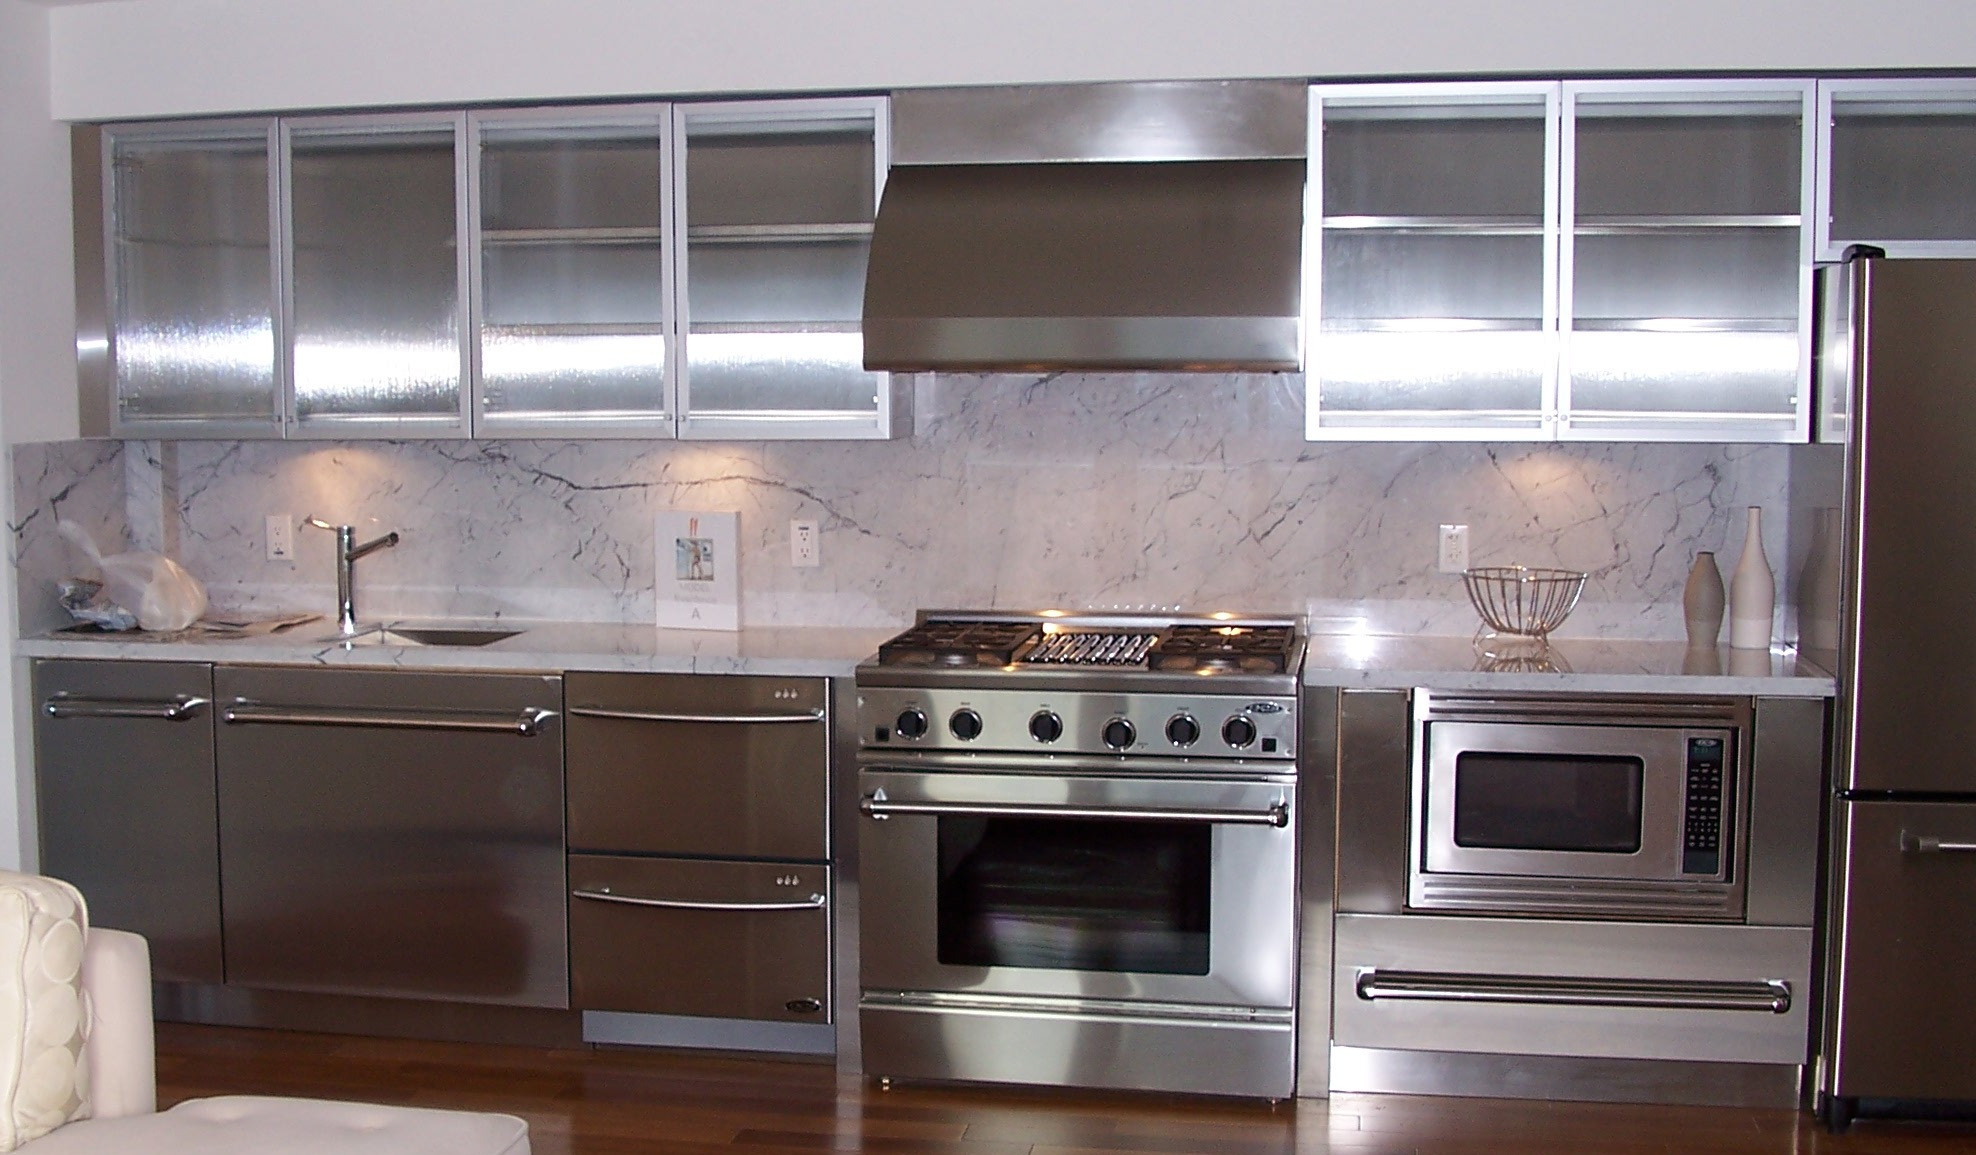 Best ideas about Stainless Steel Kitchen Cabinets
. Save or Pin Stainless Steel Kitchen Cabinets Now.